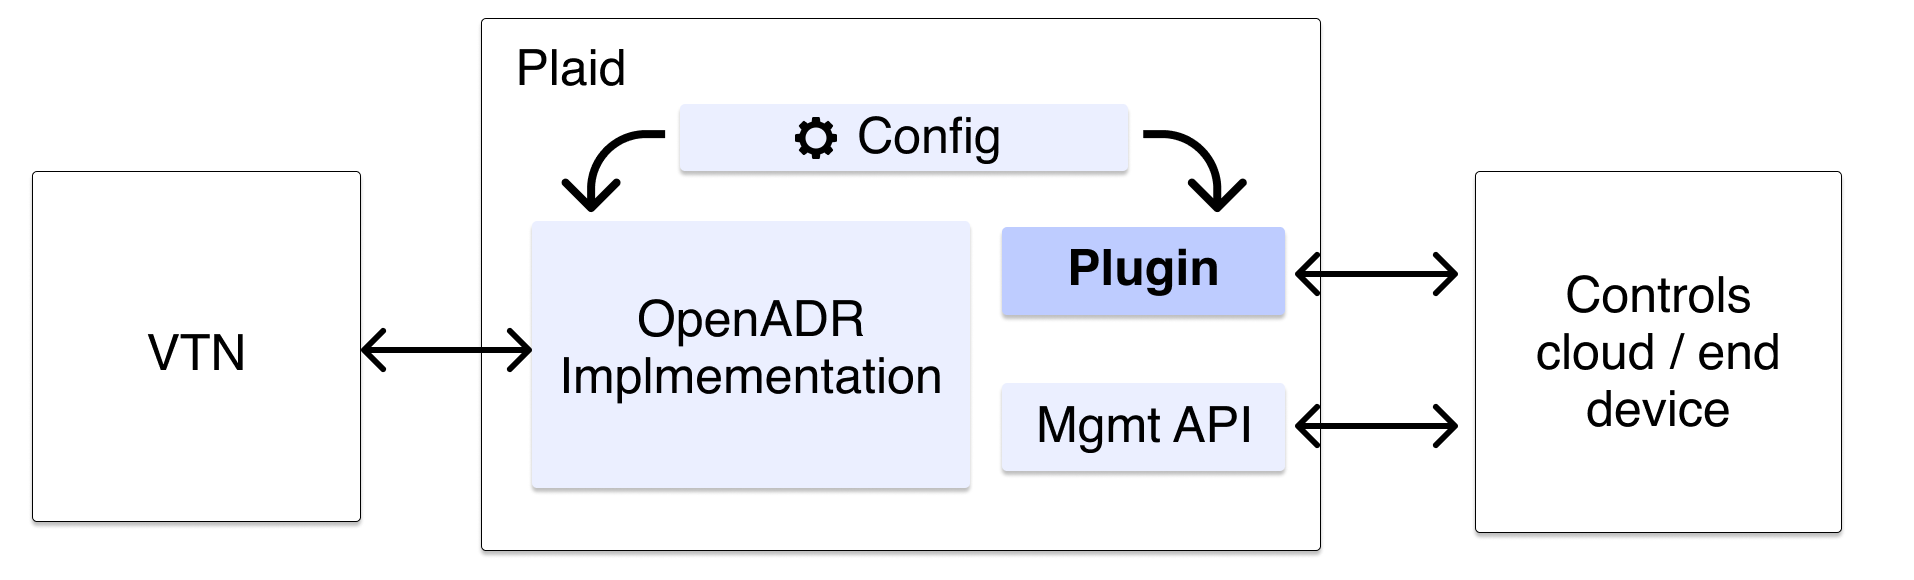 Plaid Diagram highlighting Plugin